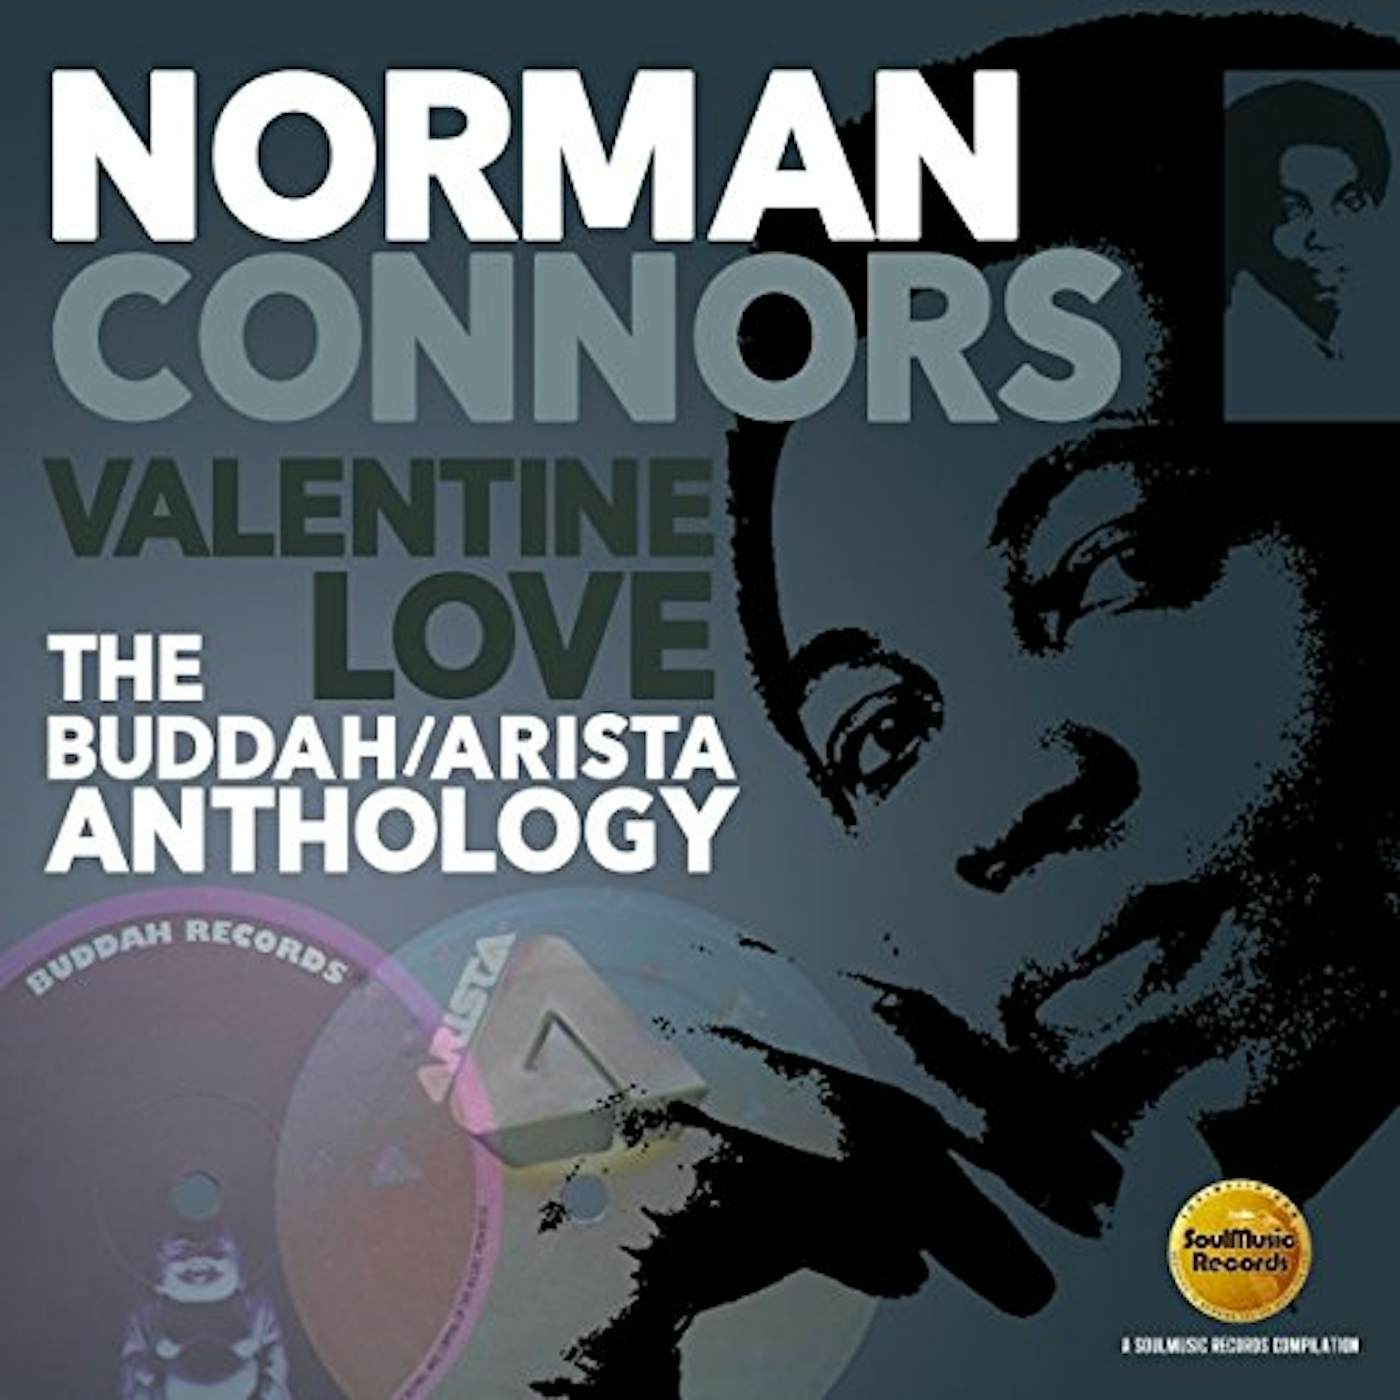 Norman Connors VALENTINE LOVE: BUDDAH / ARISTA ANTHOLOGY CD